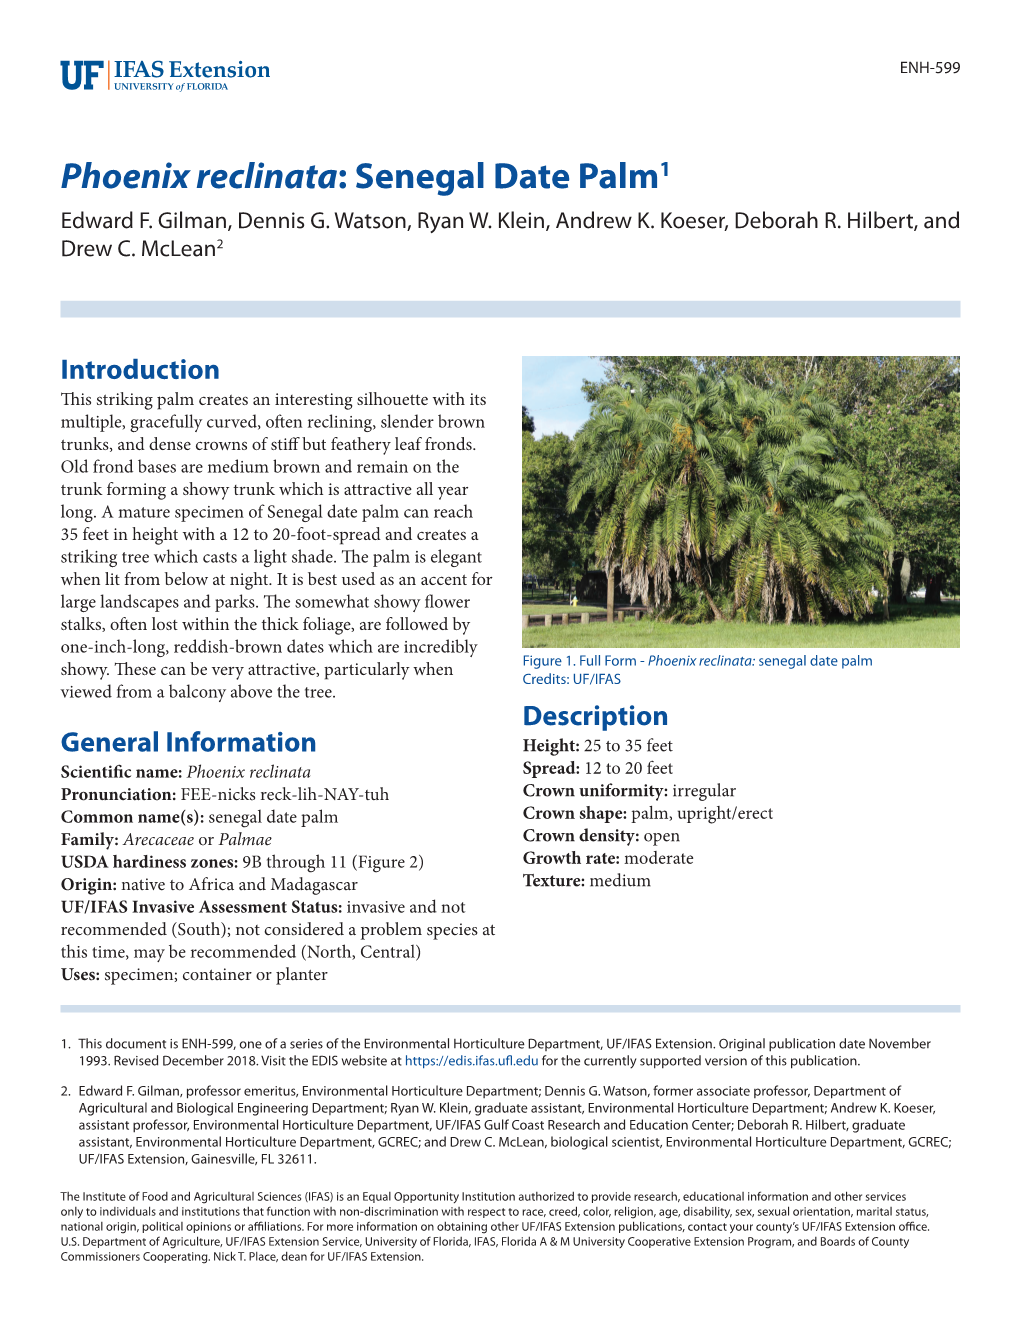 Phoenix Reclinata: Senegal Date Palm1 Edward F